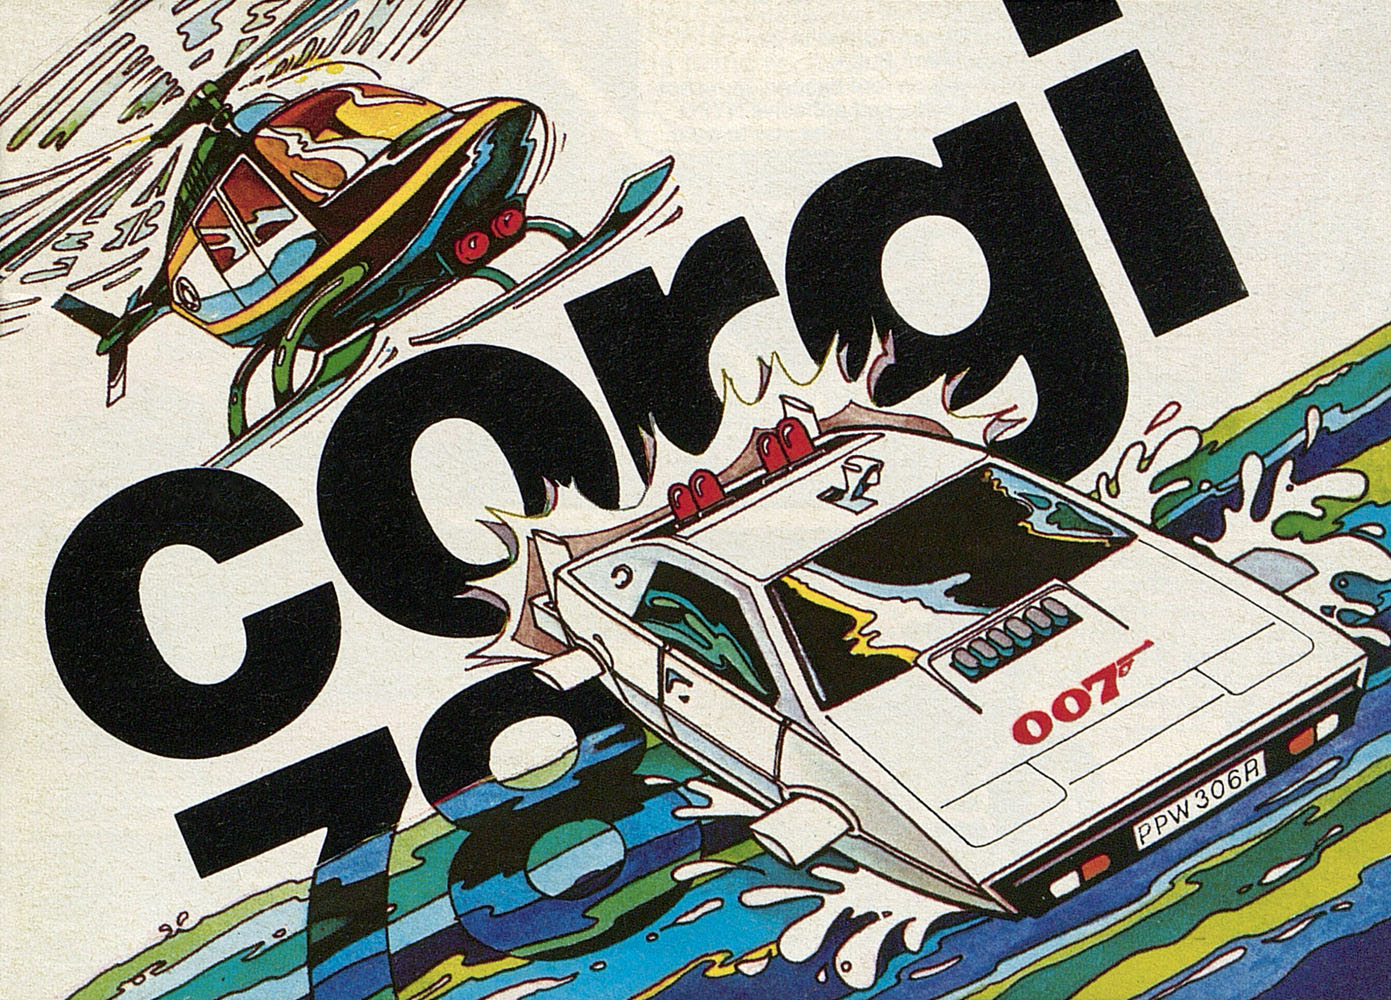 Corgi Toys catalog 1978